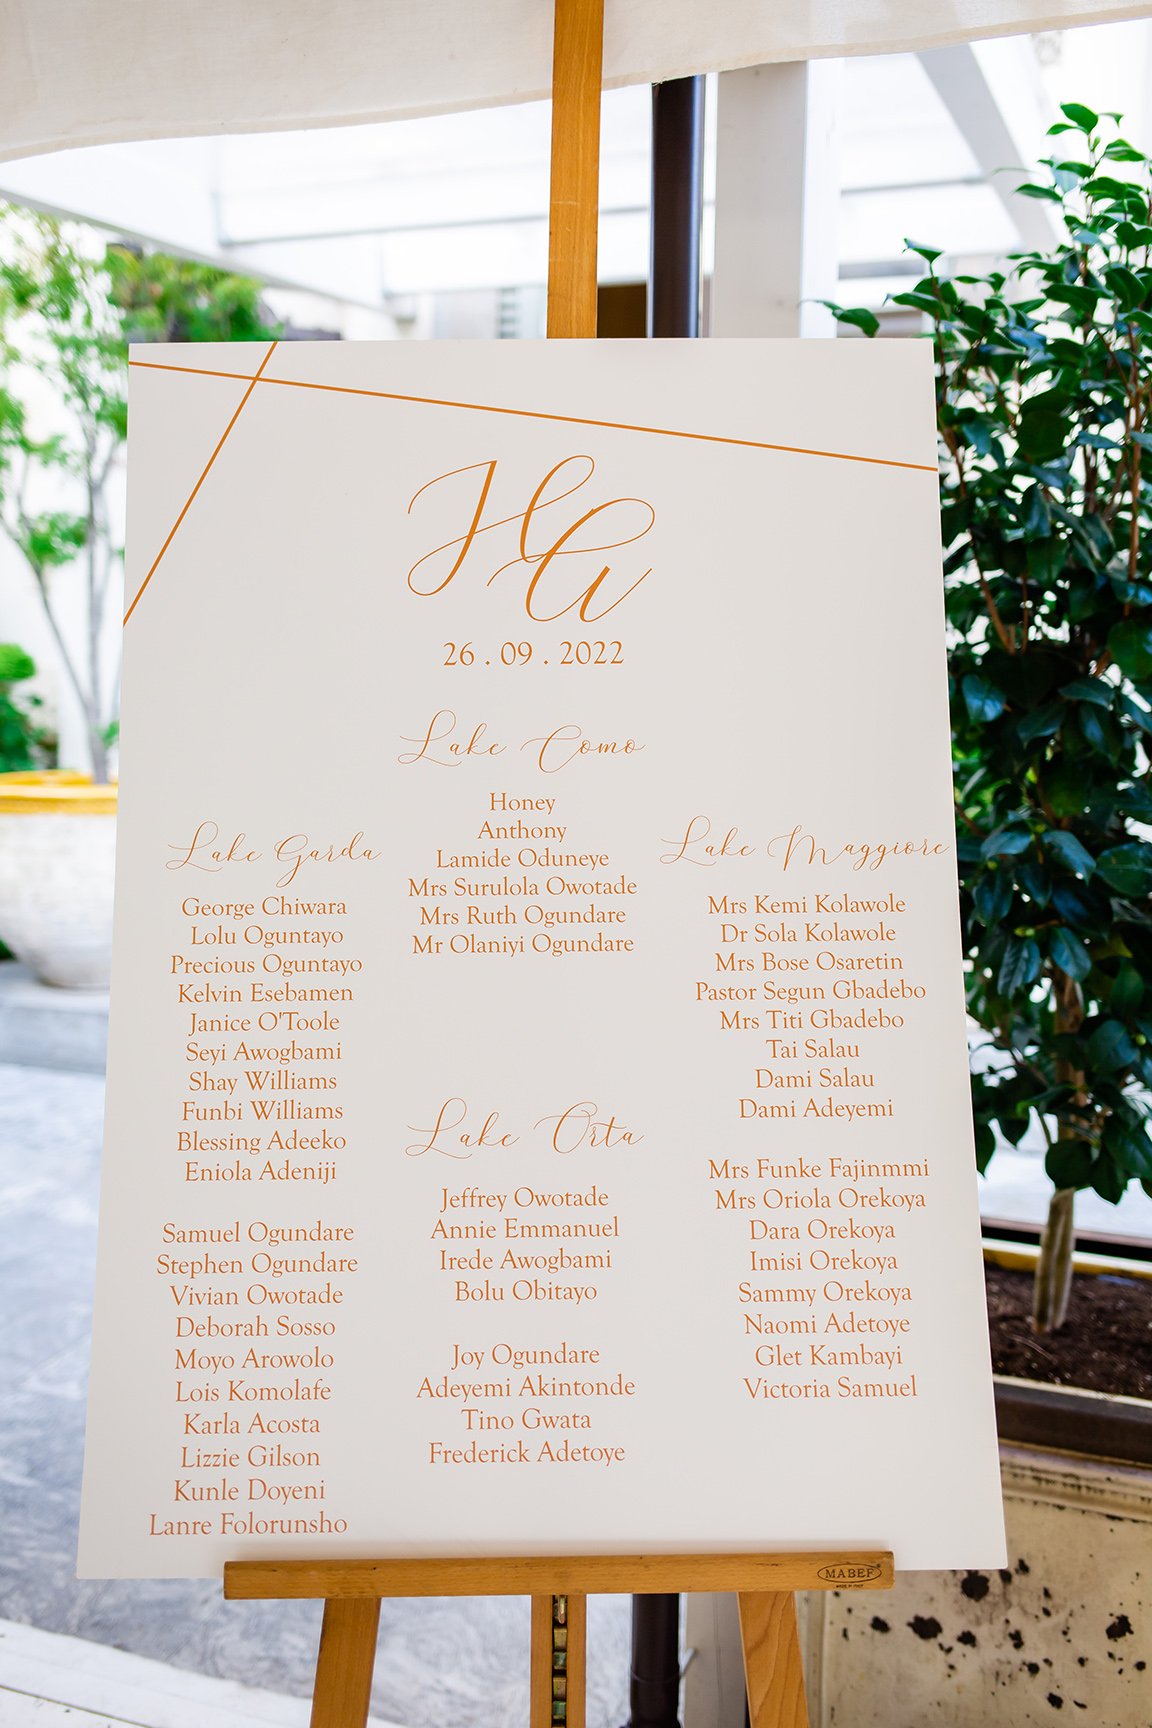 Villa Geno - SugarEvents Luxury Wedding and Event Planner